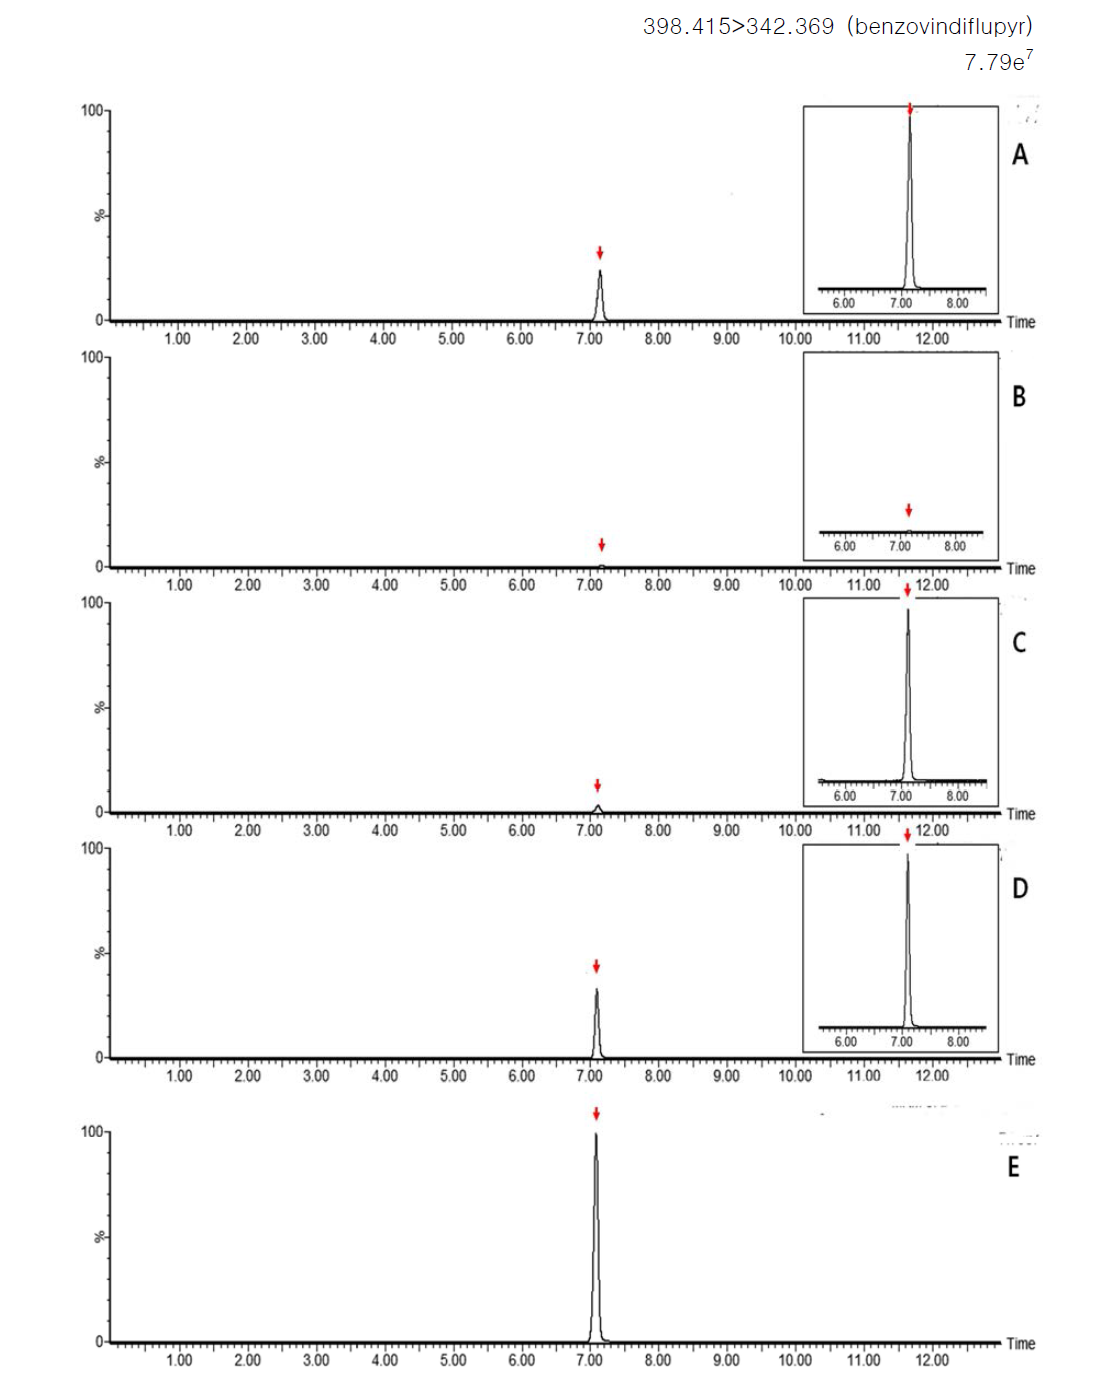 Representative MRM(quantification ion) chromatograms of benzovindiflupyr corresponding to: (A) standard solution at 0.05 mg/kg, (B) mandarin control, (C) spiked at 0.005 mg/kg, (D) spiked at 0.05 mg/kg and (E) spiked at 0.25 mg/kg